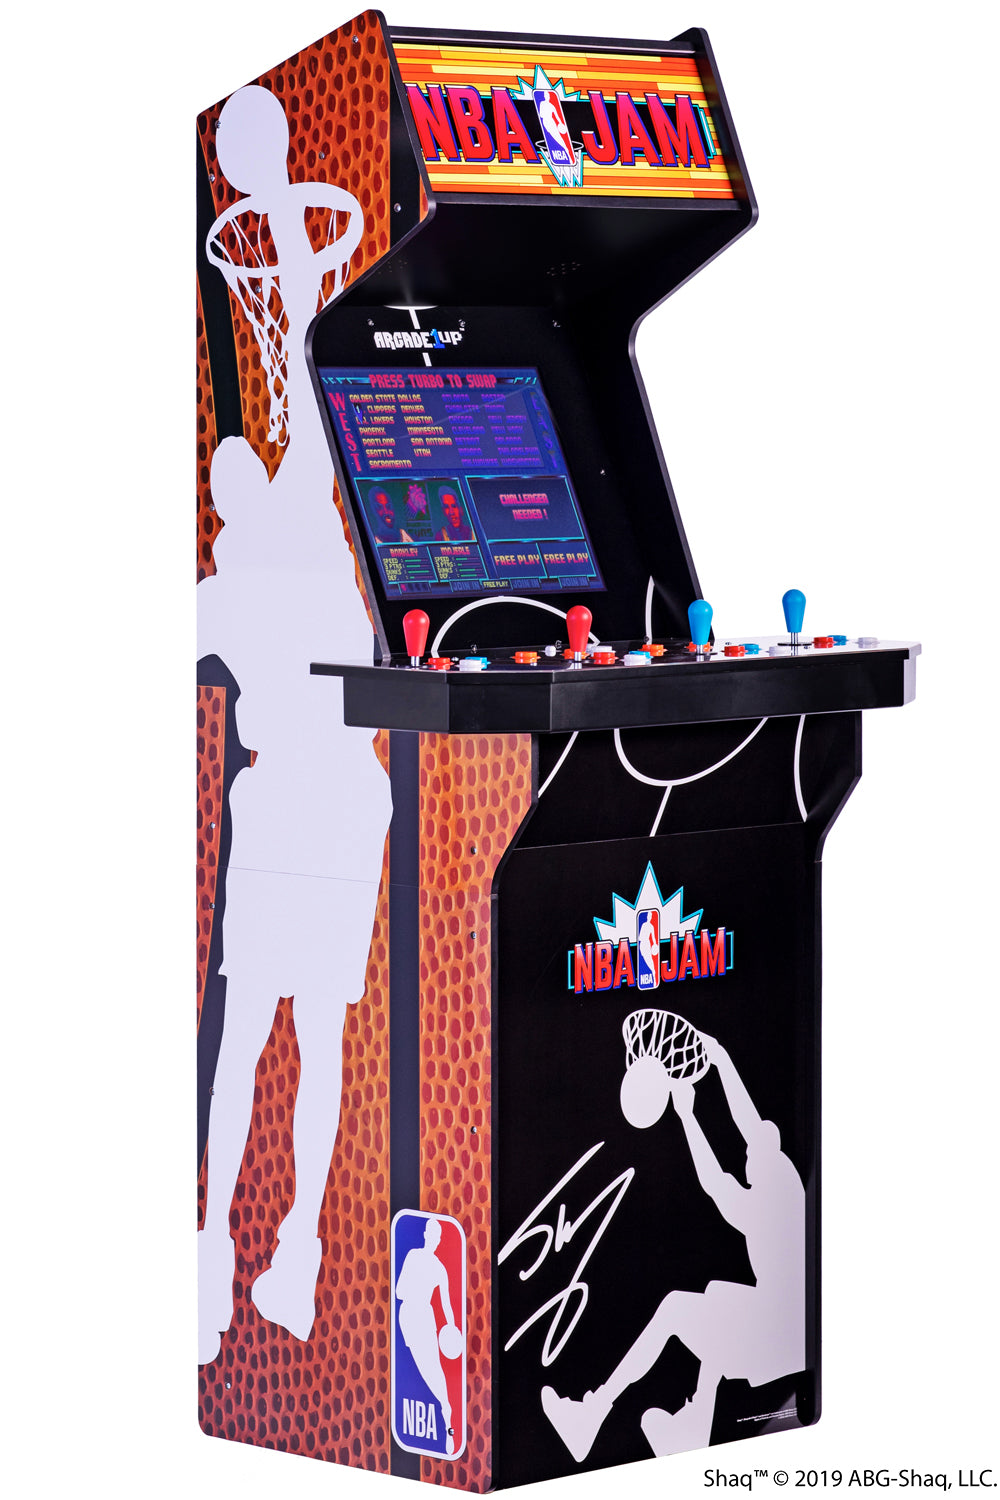 jam arcade game